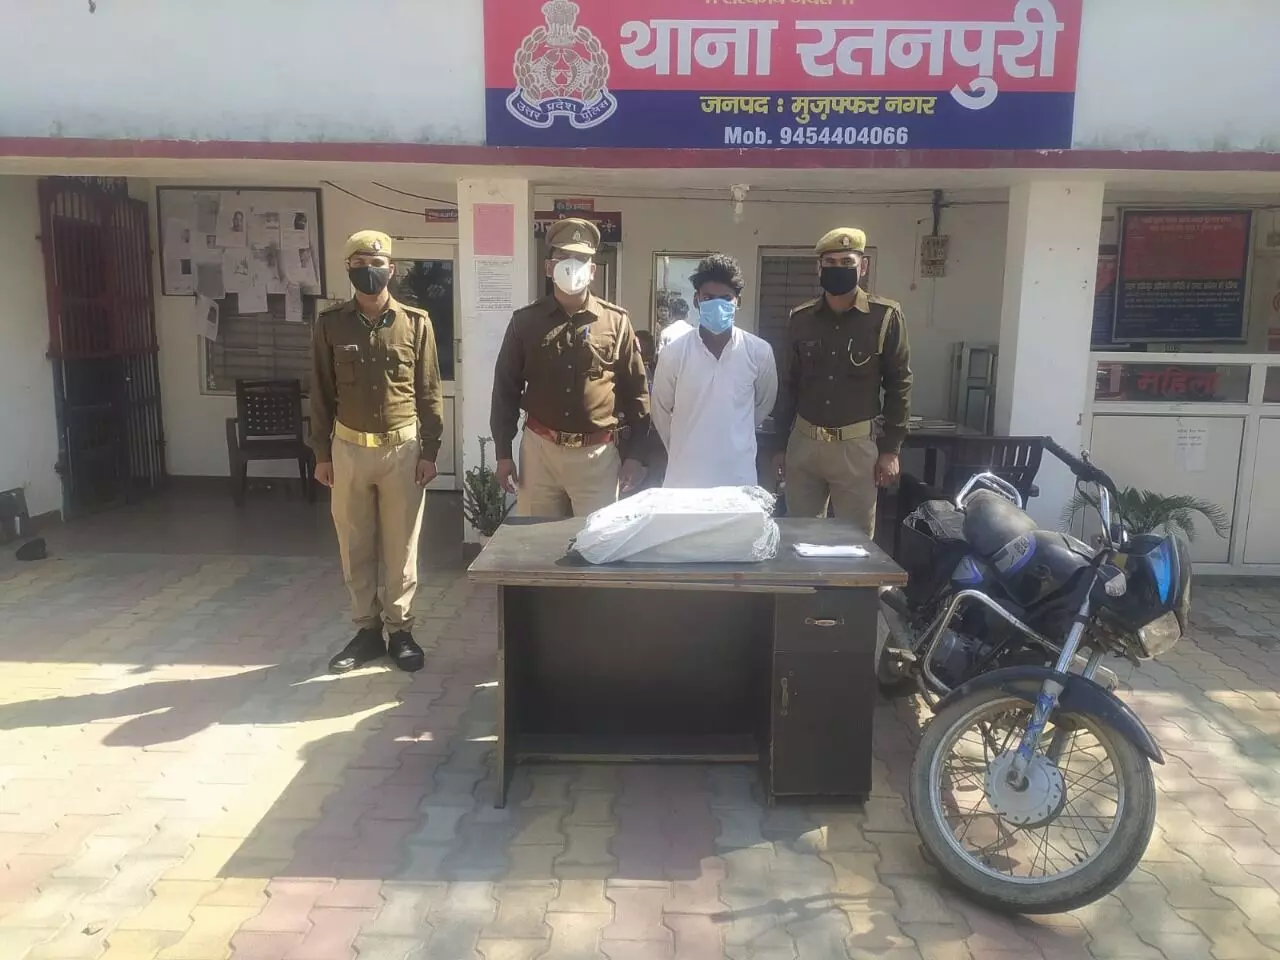 मुजफ्फरनगर पुलिस ने शातिर चोर को भेजा जेल, शत प्रतिशत माल बरामद